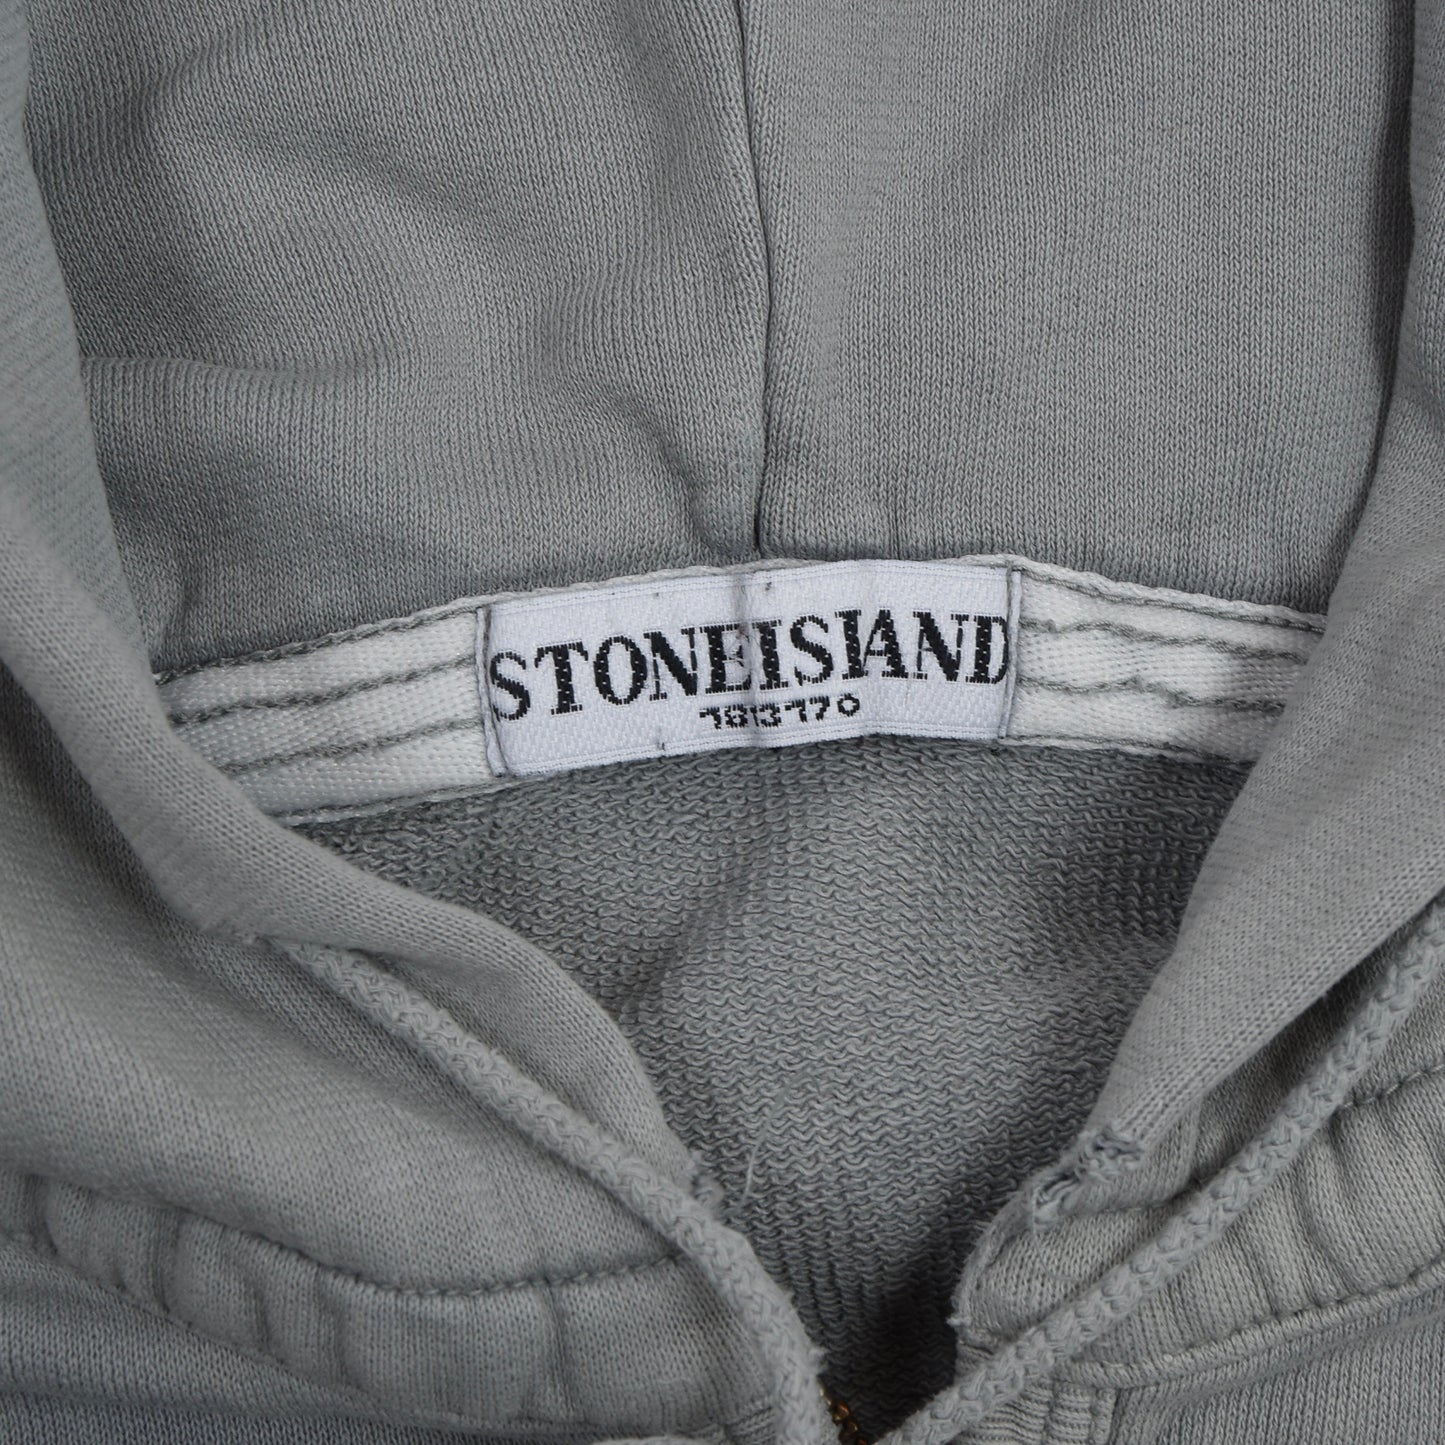 Stone Island SS 2010 Hoodie Size L - Steel Grey